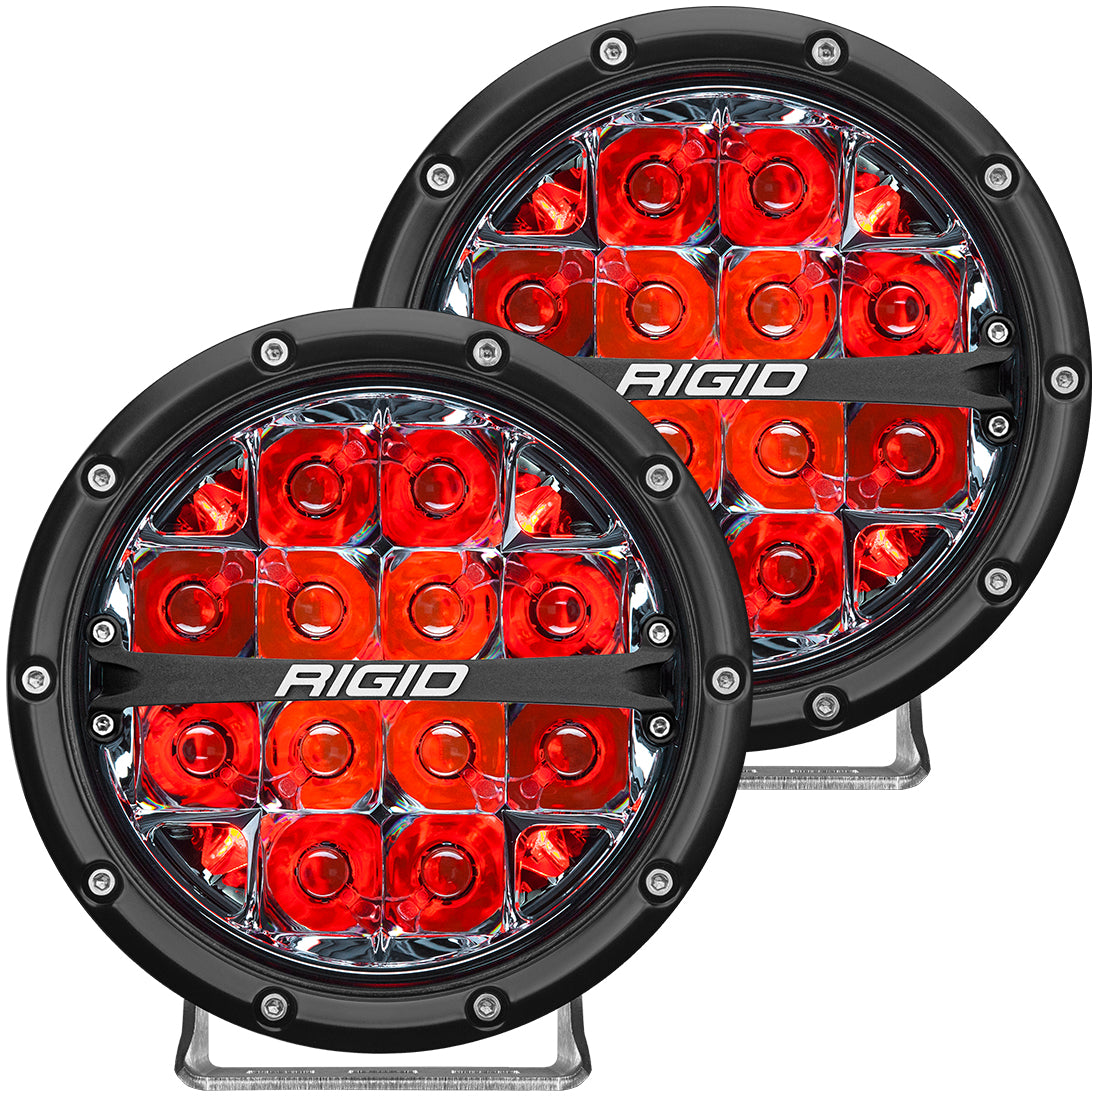 Rigid Industries 360-Series 6 Inch Led Off-Road Spot Beam Red Backlight Pair RIGID Industries 36203